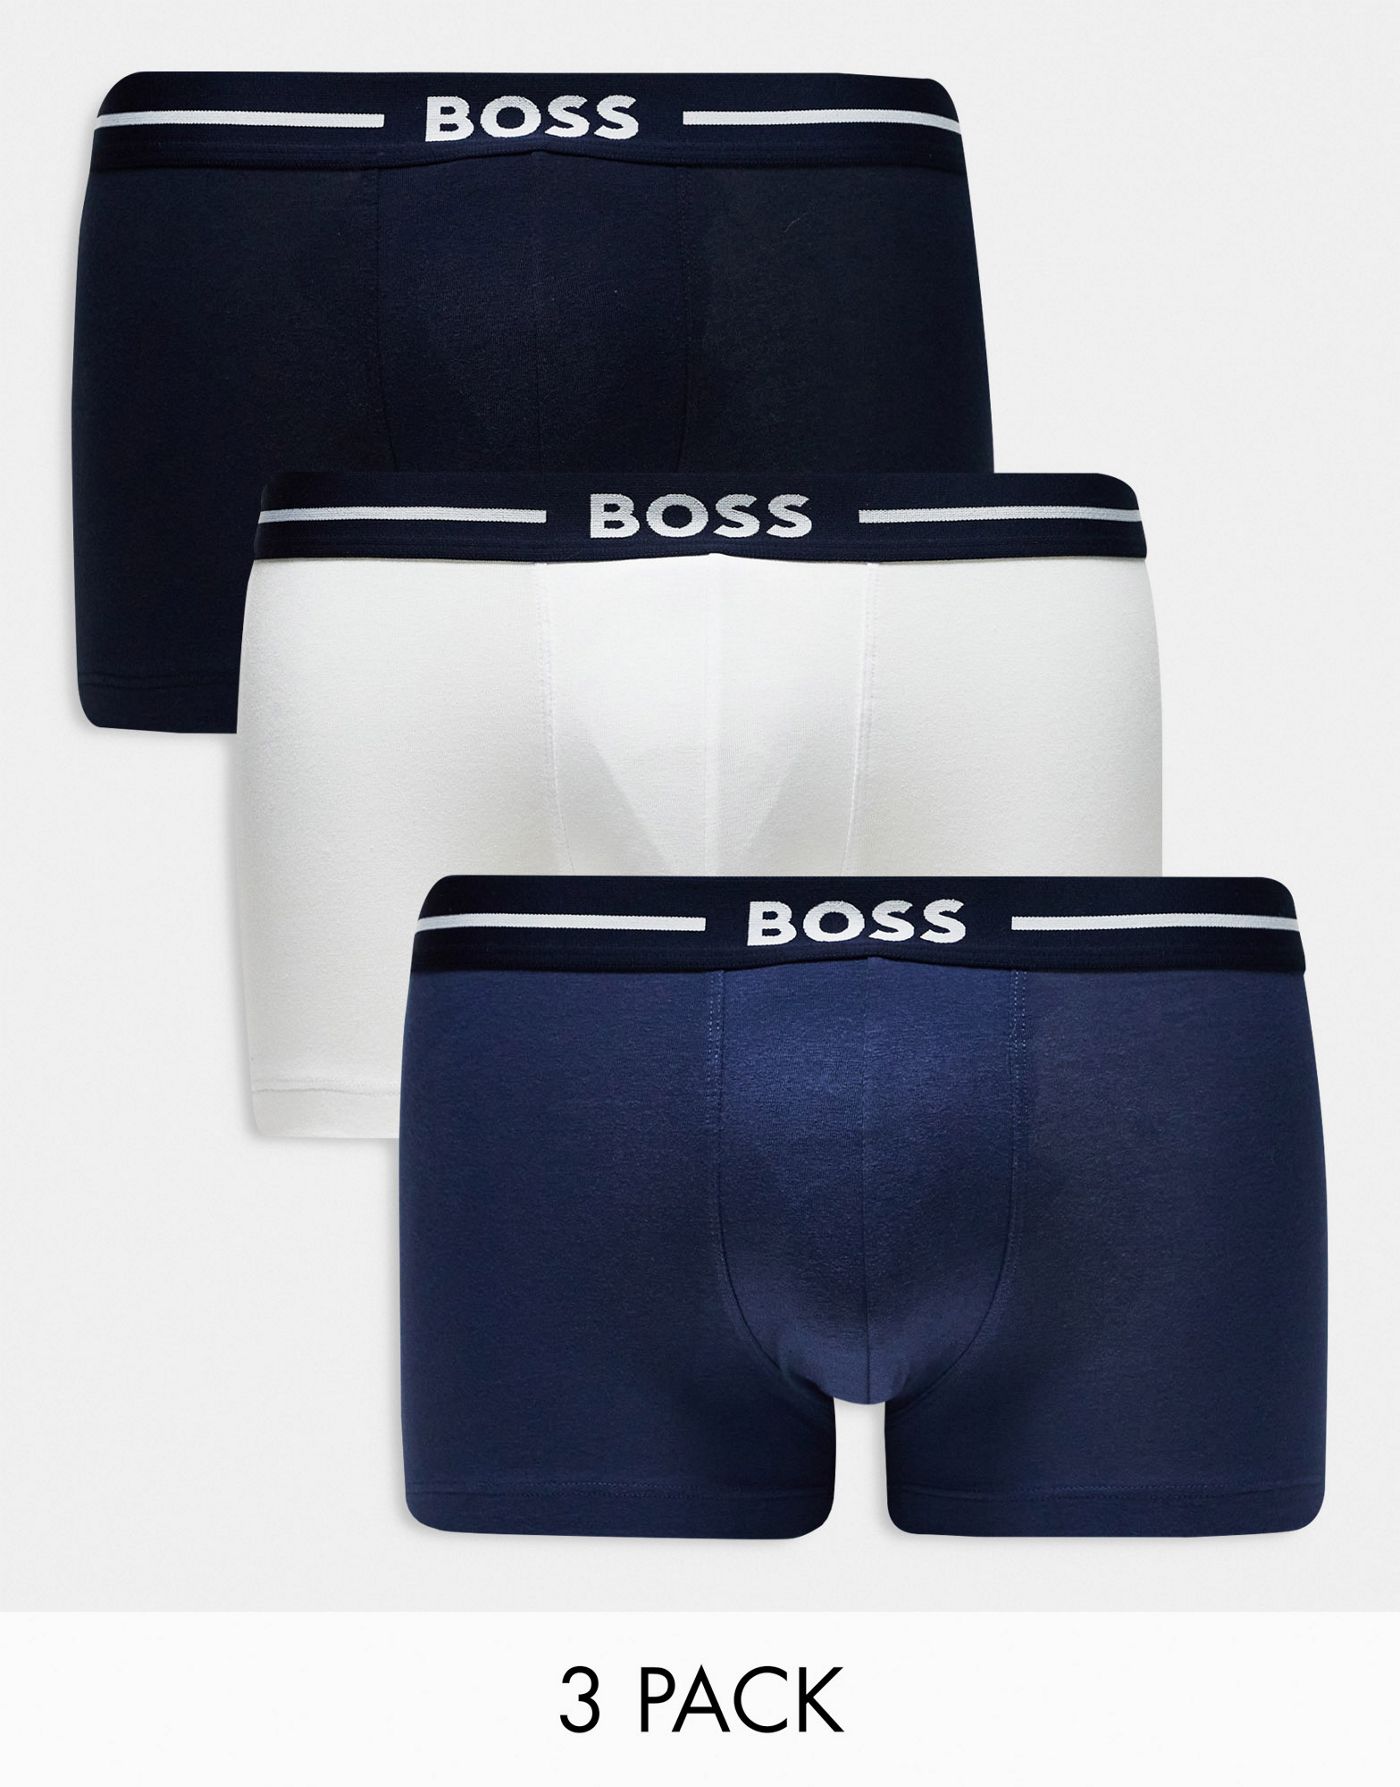 Boss Bodywear bold 3 pack trunks in navy, white and blue 